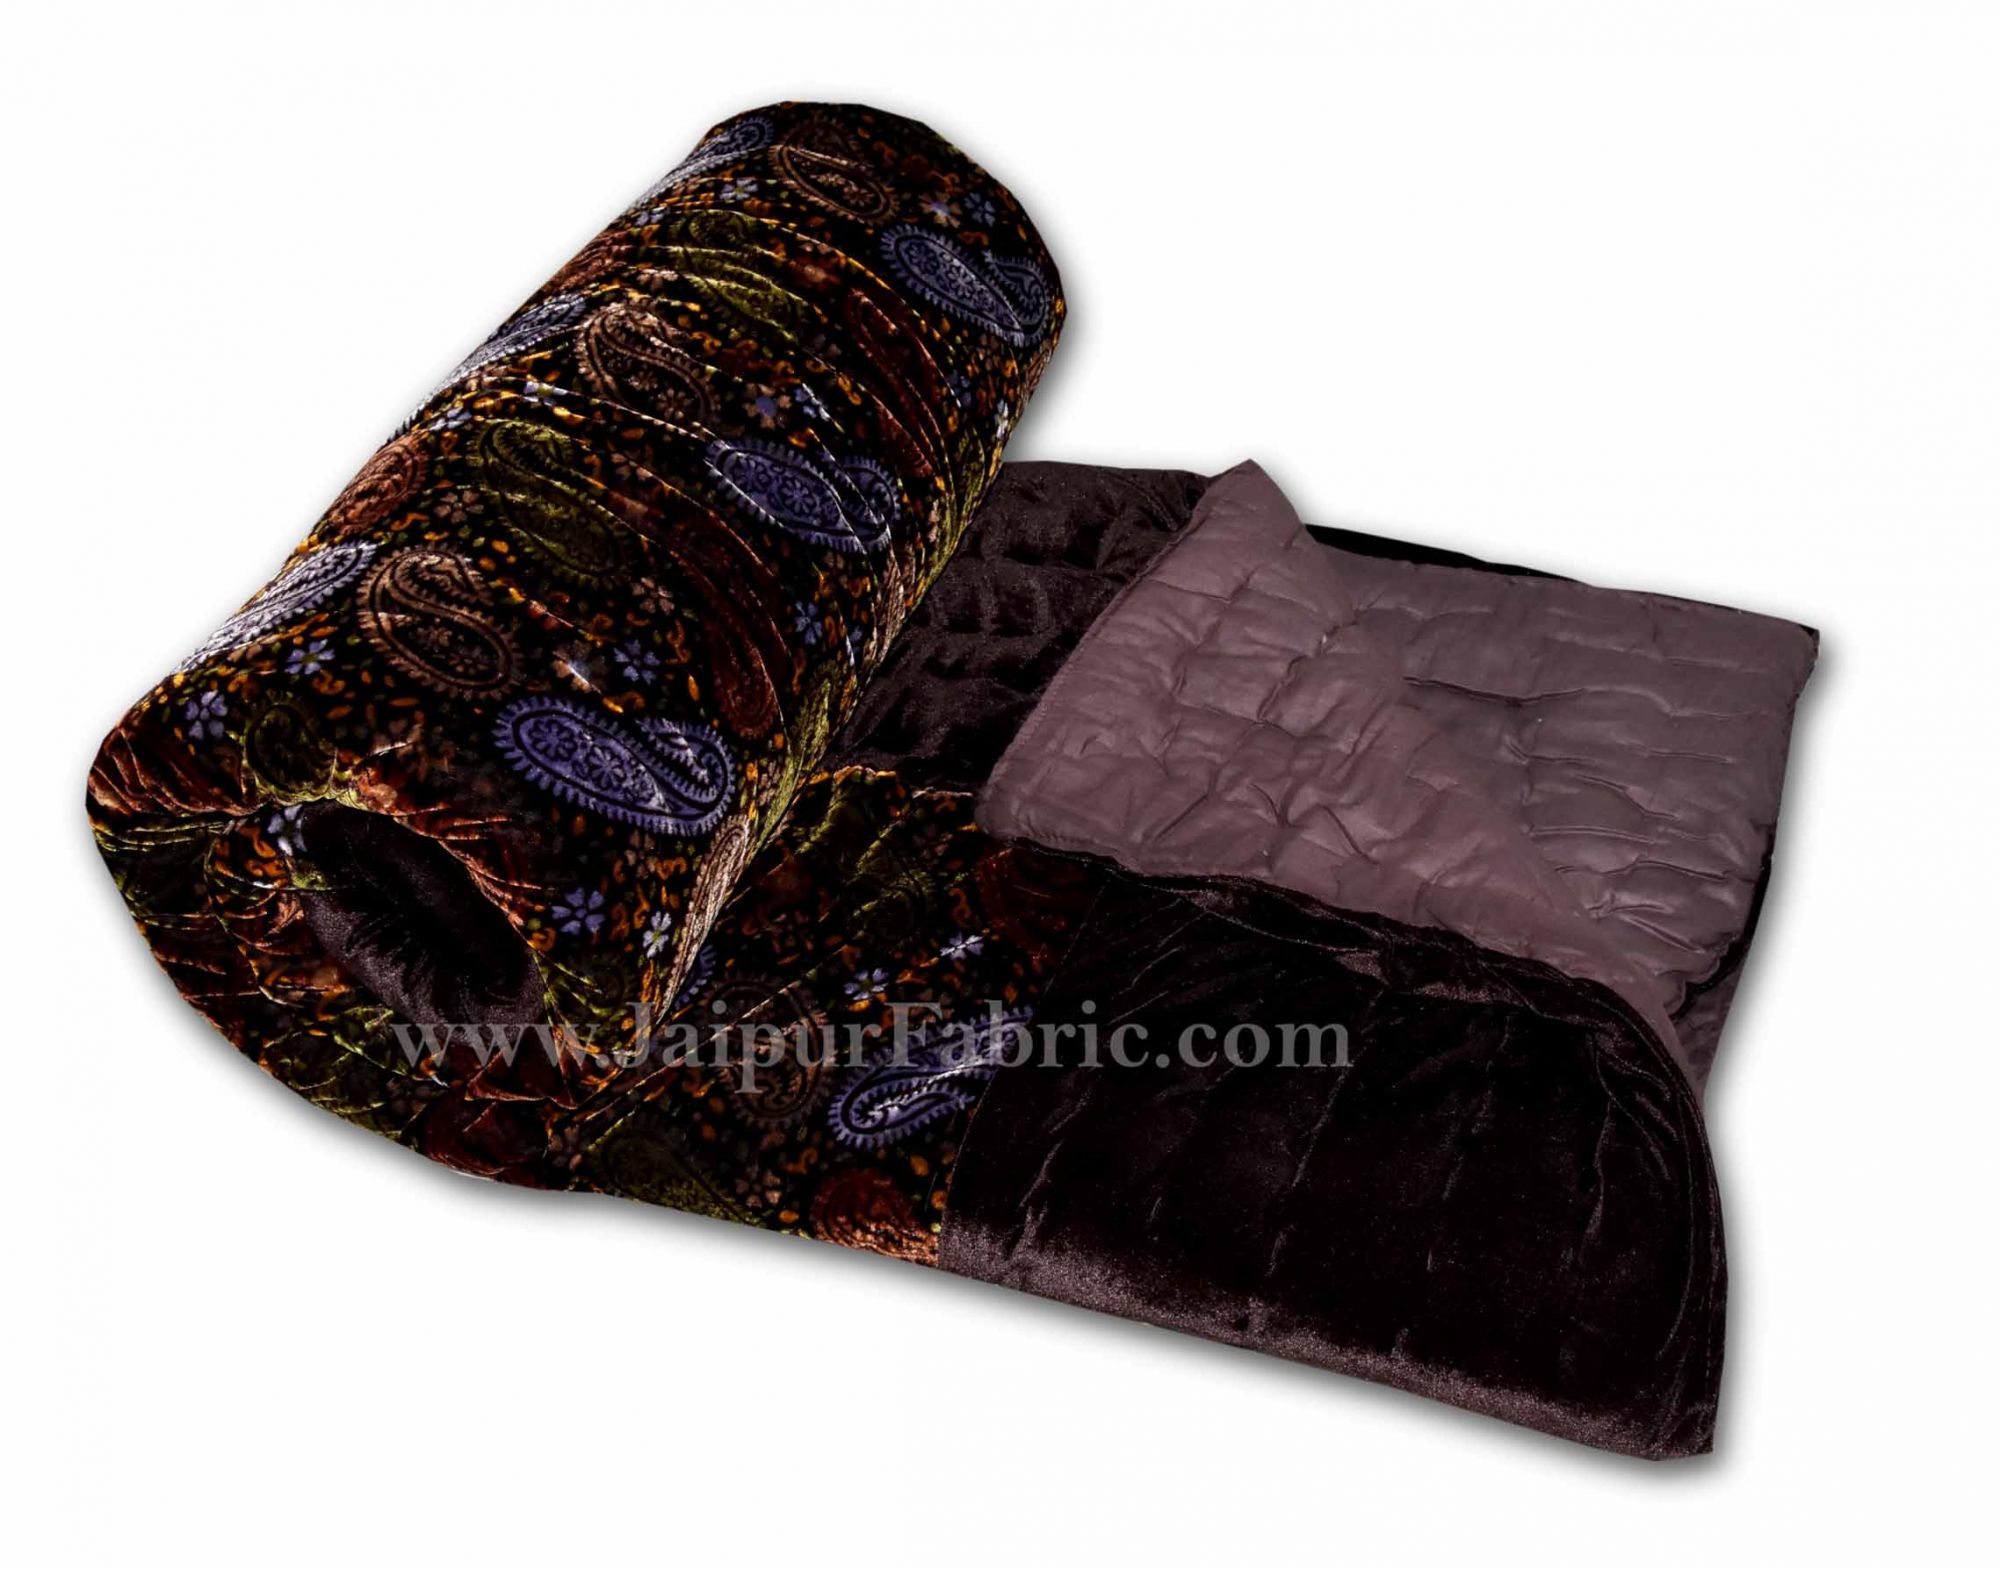 Velvet Cloth Double Bed Quilt Jaipuri Razai Paisley Brown Shaneel Rajai by Jaipur Fabric